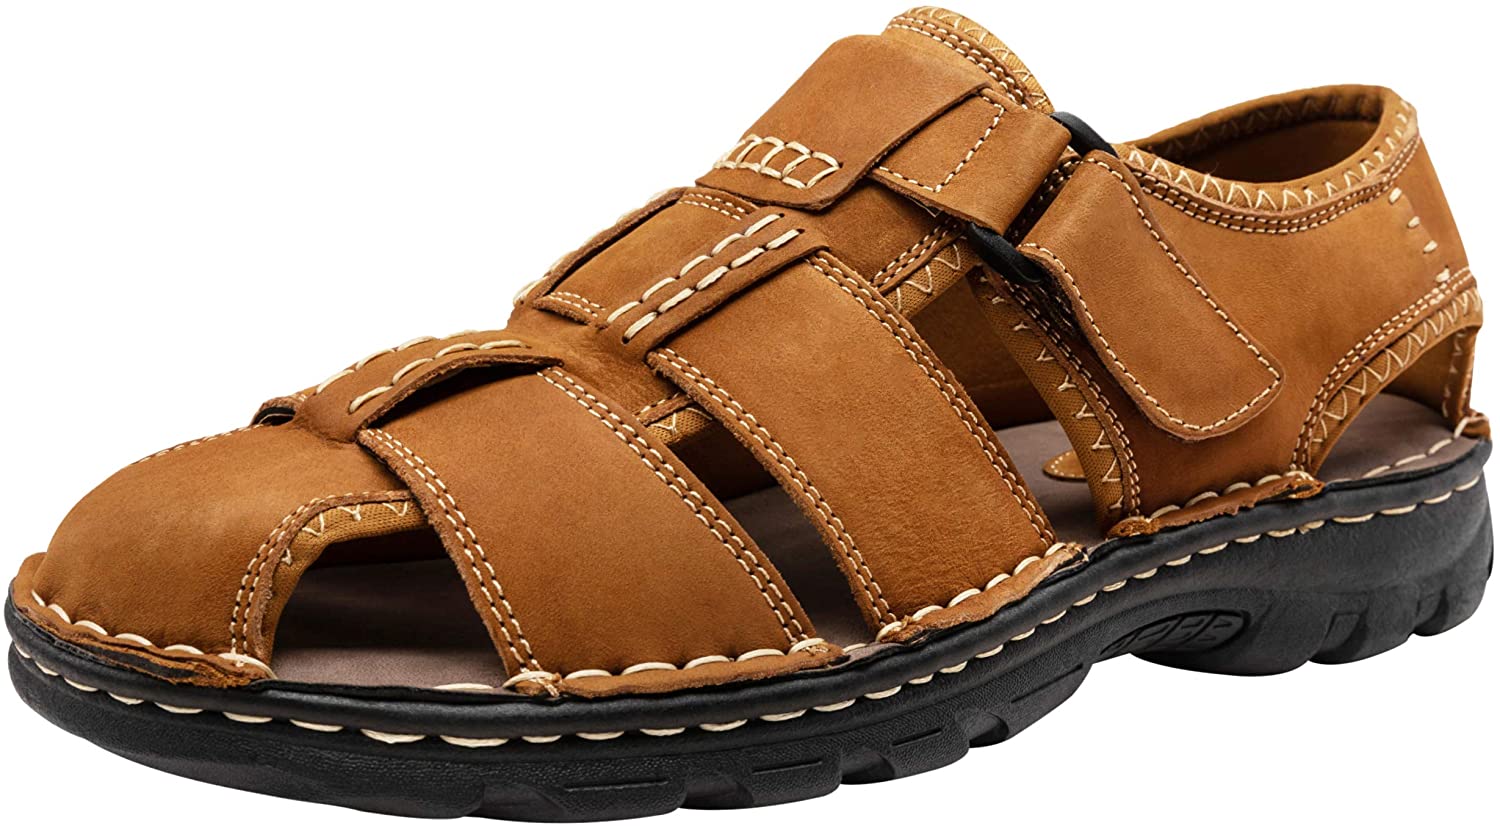 Jousen Men's Sandals Leather Open Toe Beach Sandal Outdoor Summer Sport Sandals 